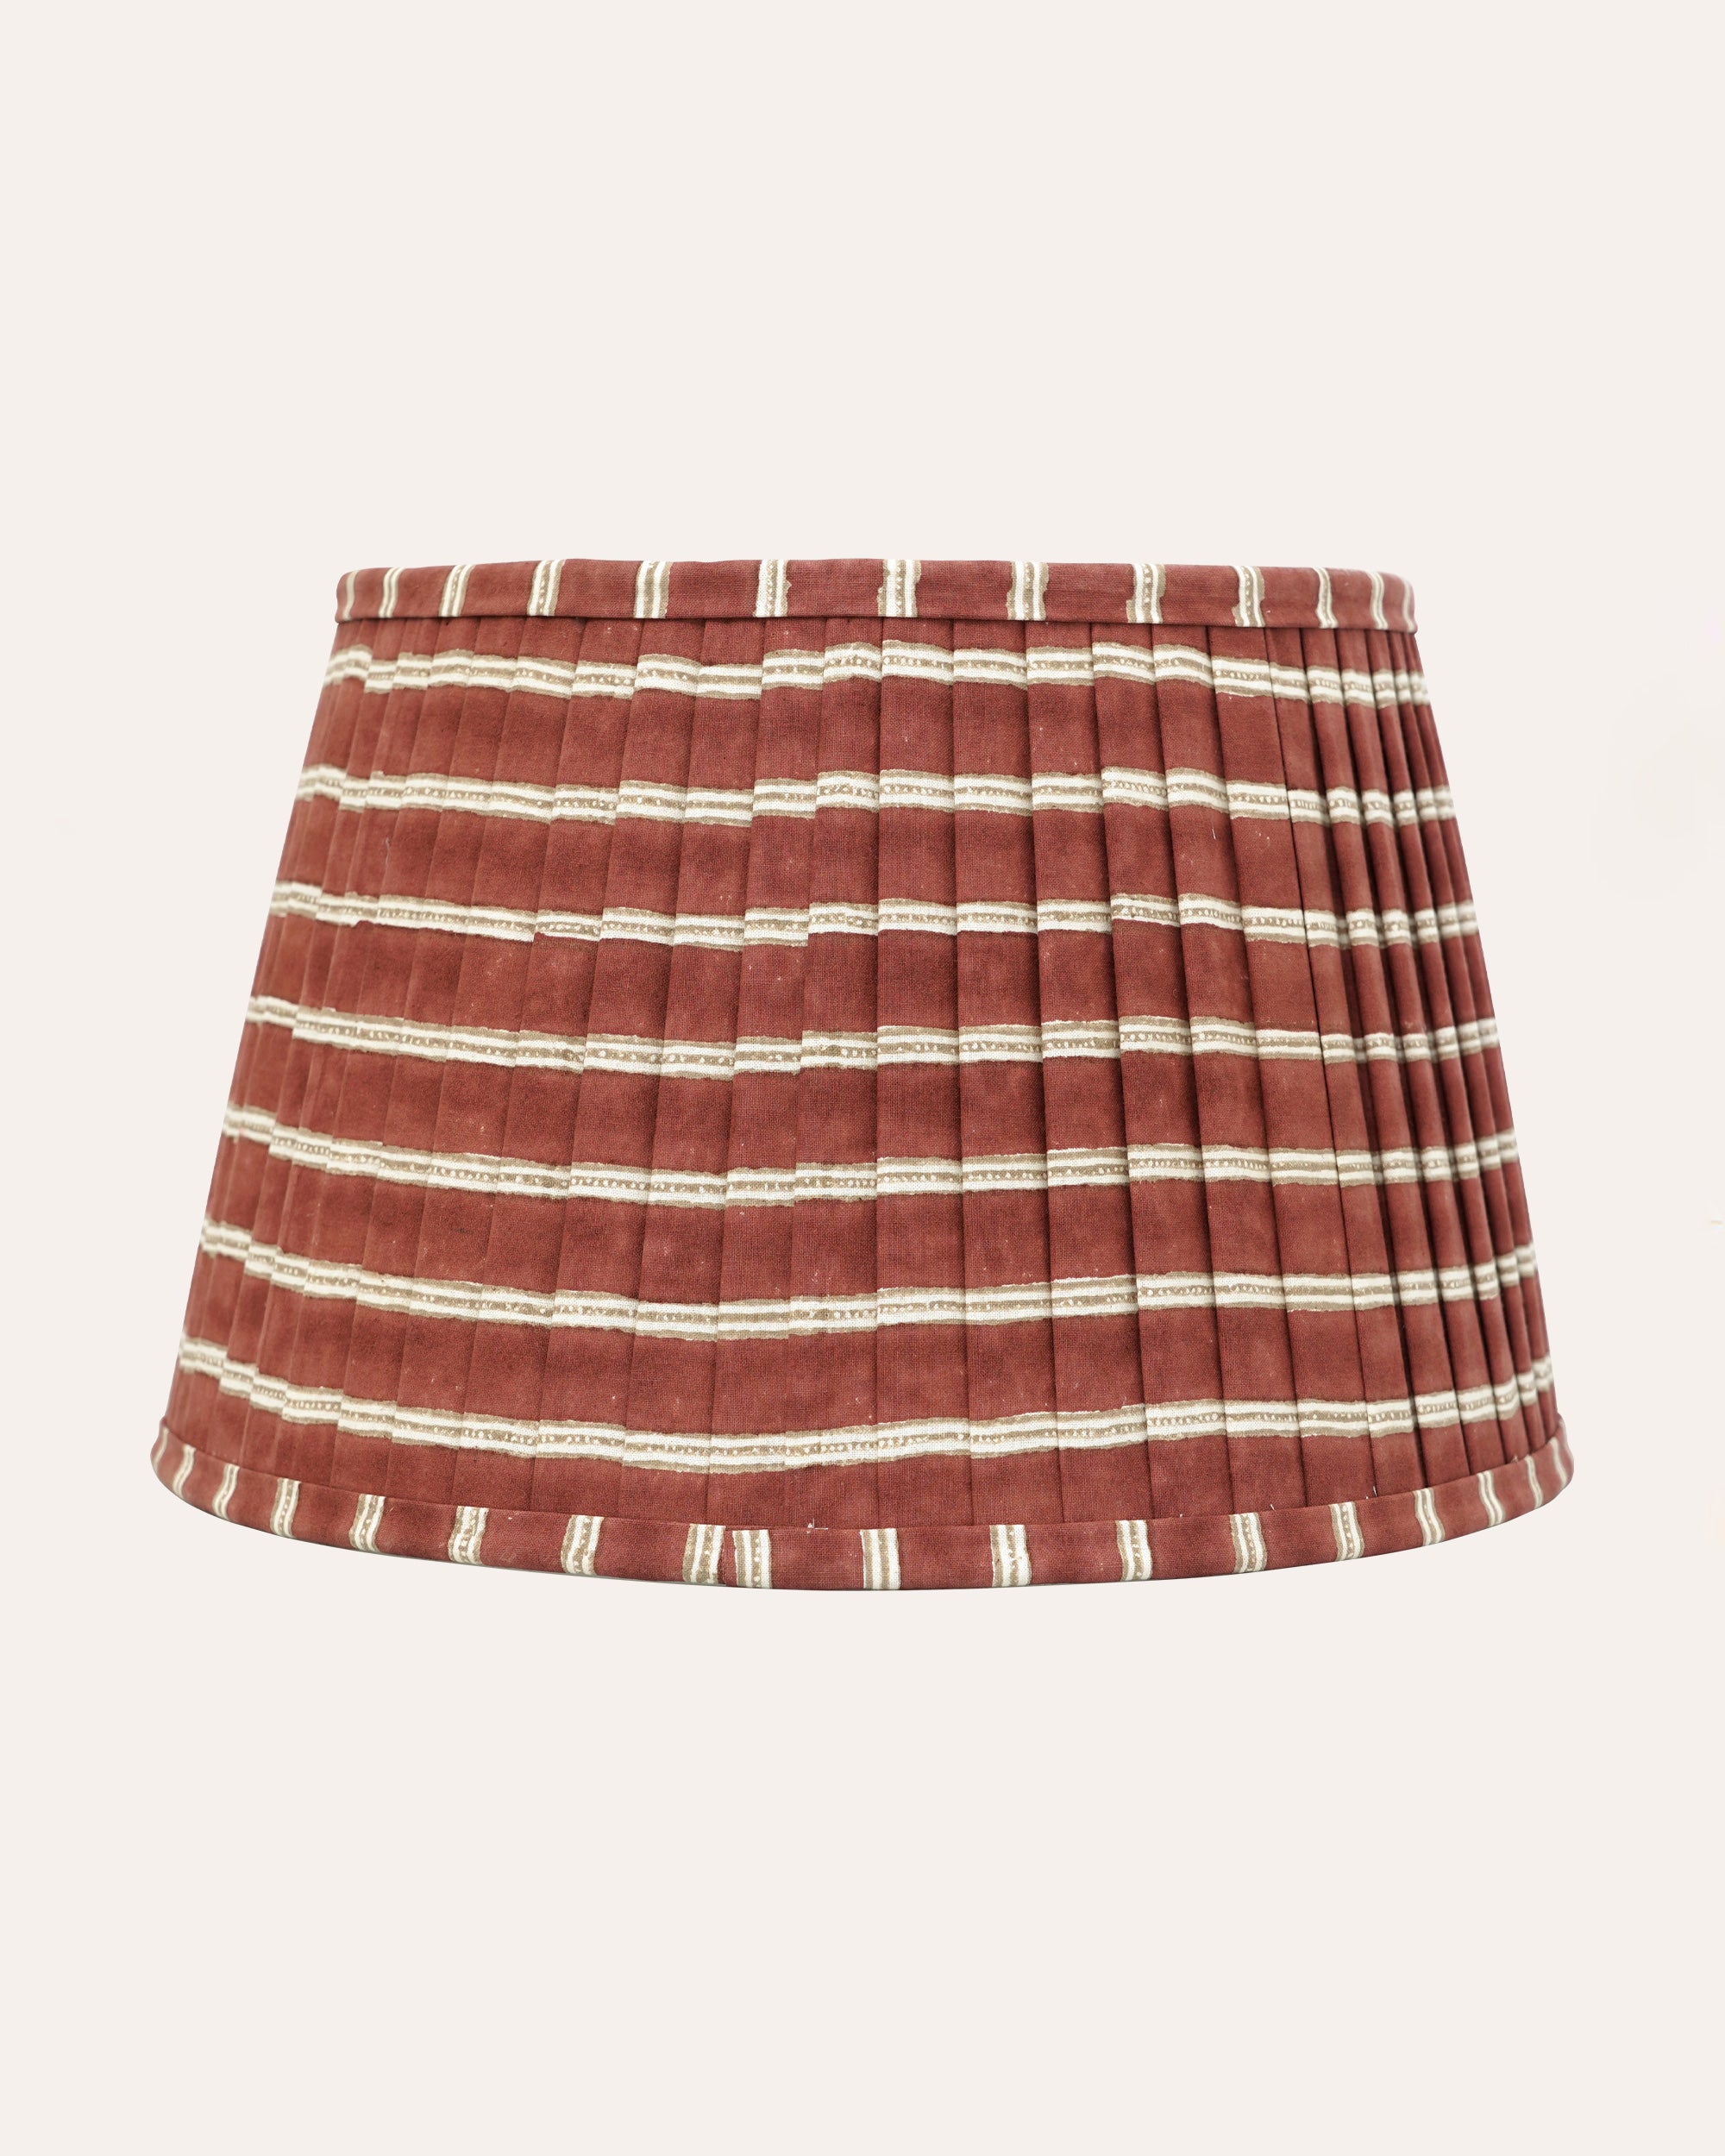 Edo Stripe Pleated Lampshade - Red